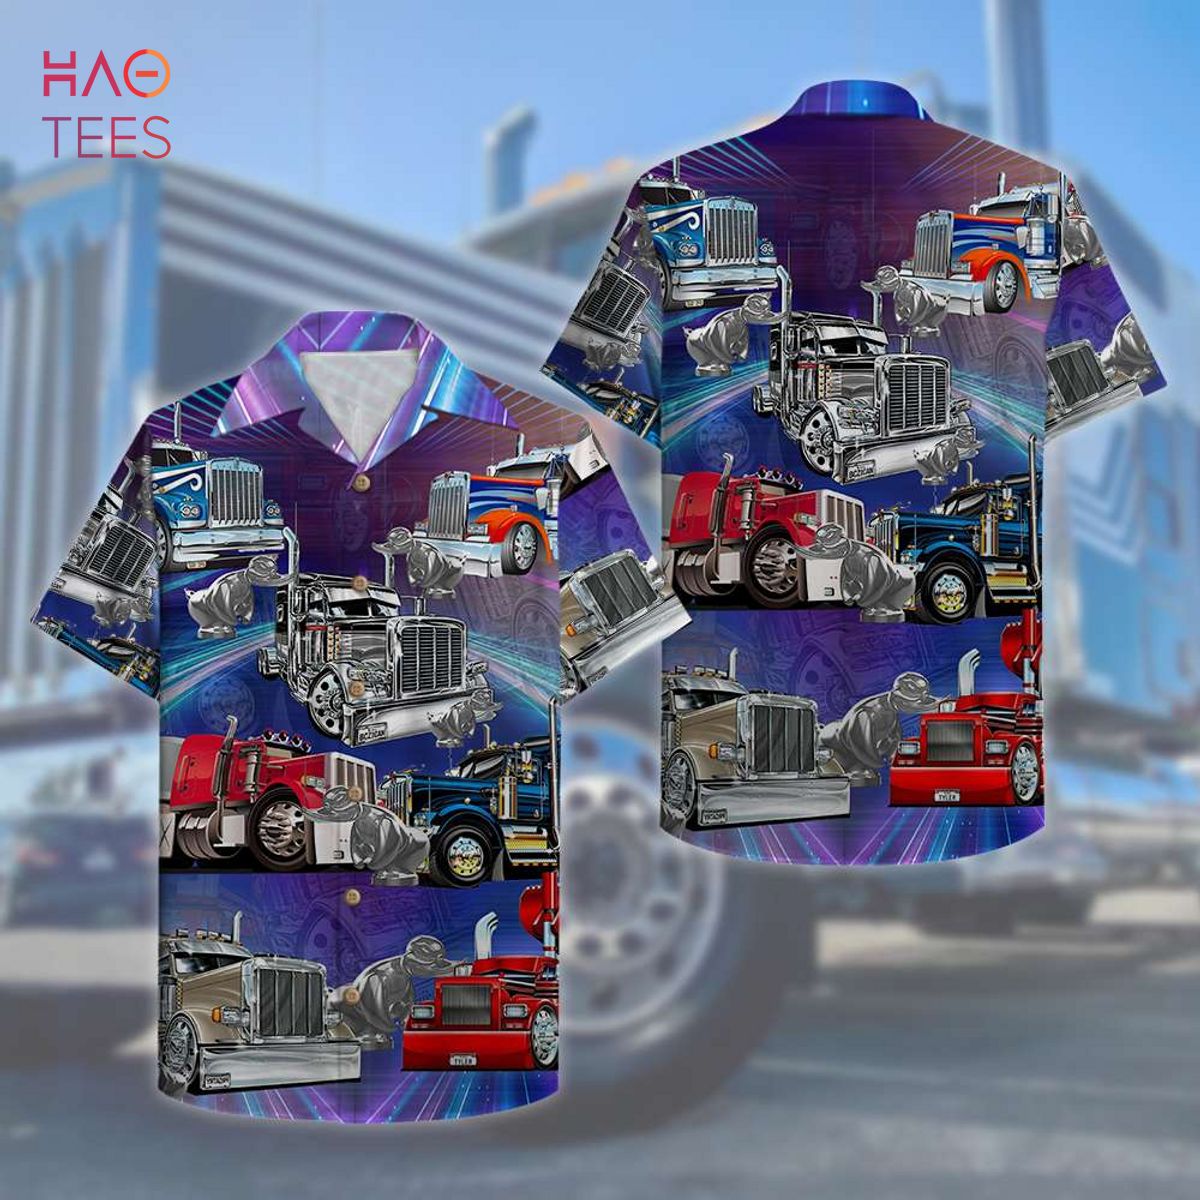 BEST Trucker Hawaiian Shirt, Aloha Shirt